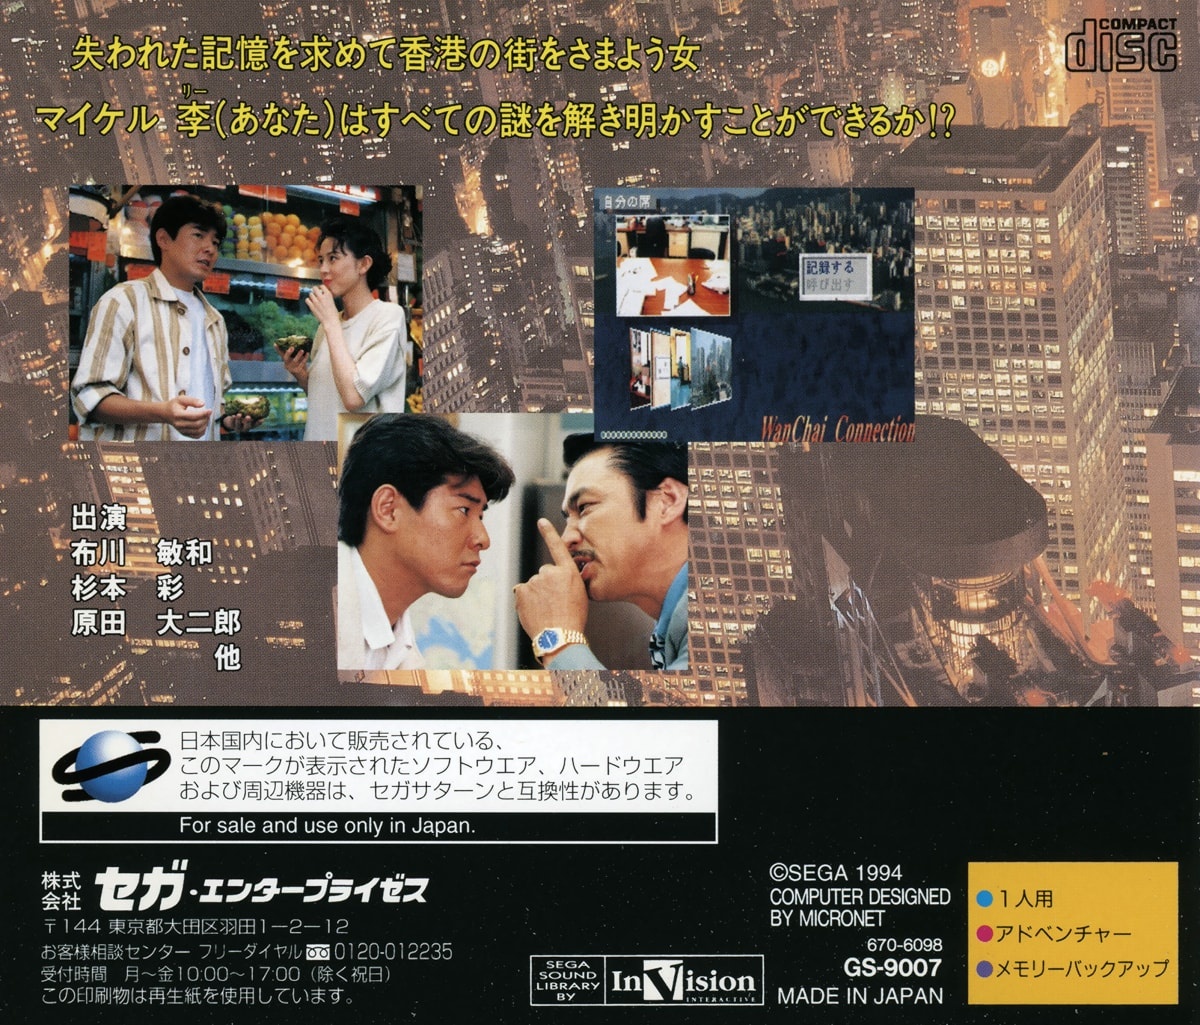 Capa do jogo WanChai Connection